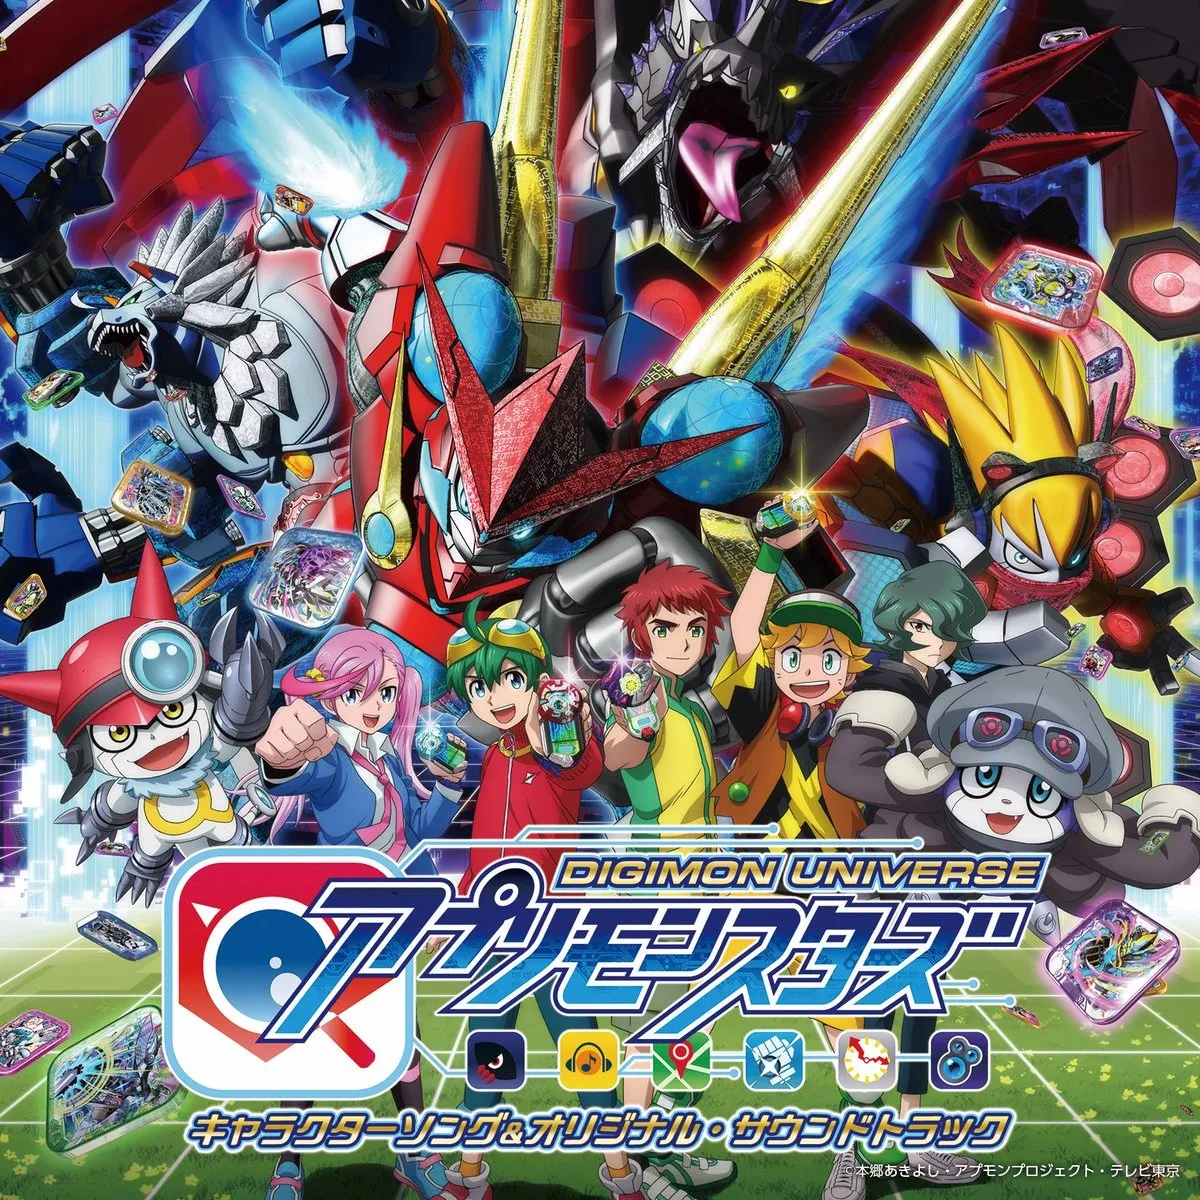 Digimon Universe Appli Monsters Character Songs & Original Soundtrack